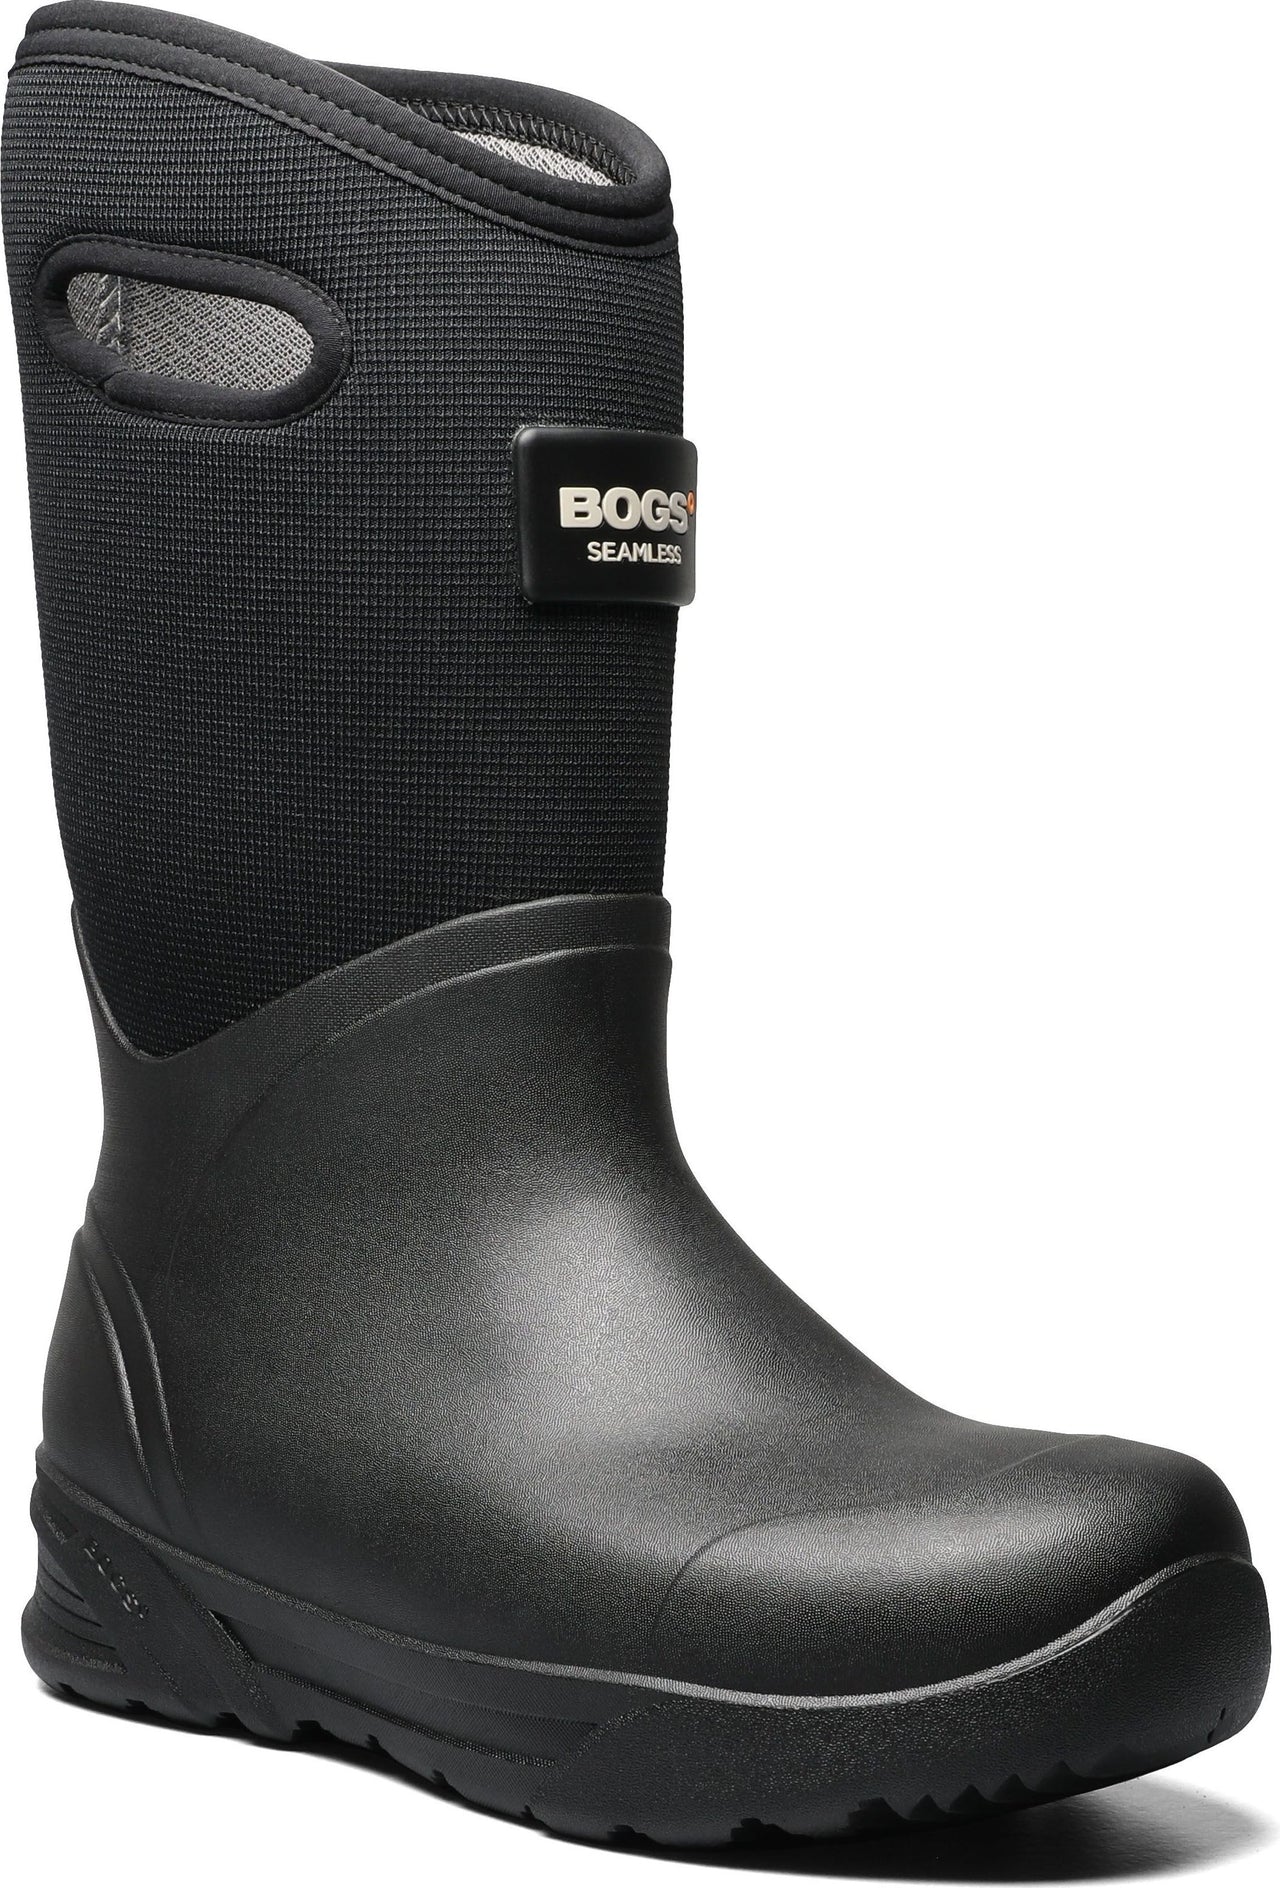 BOGS Boots Bozeman Tall Black